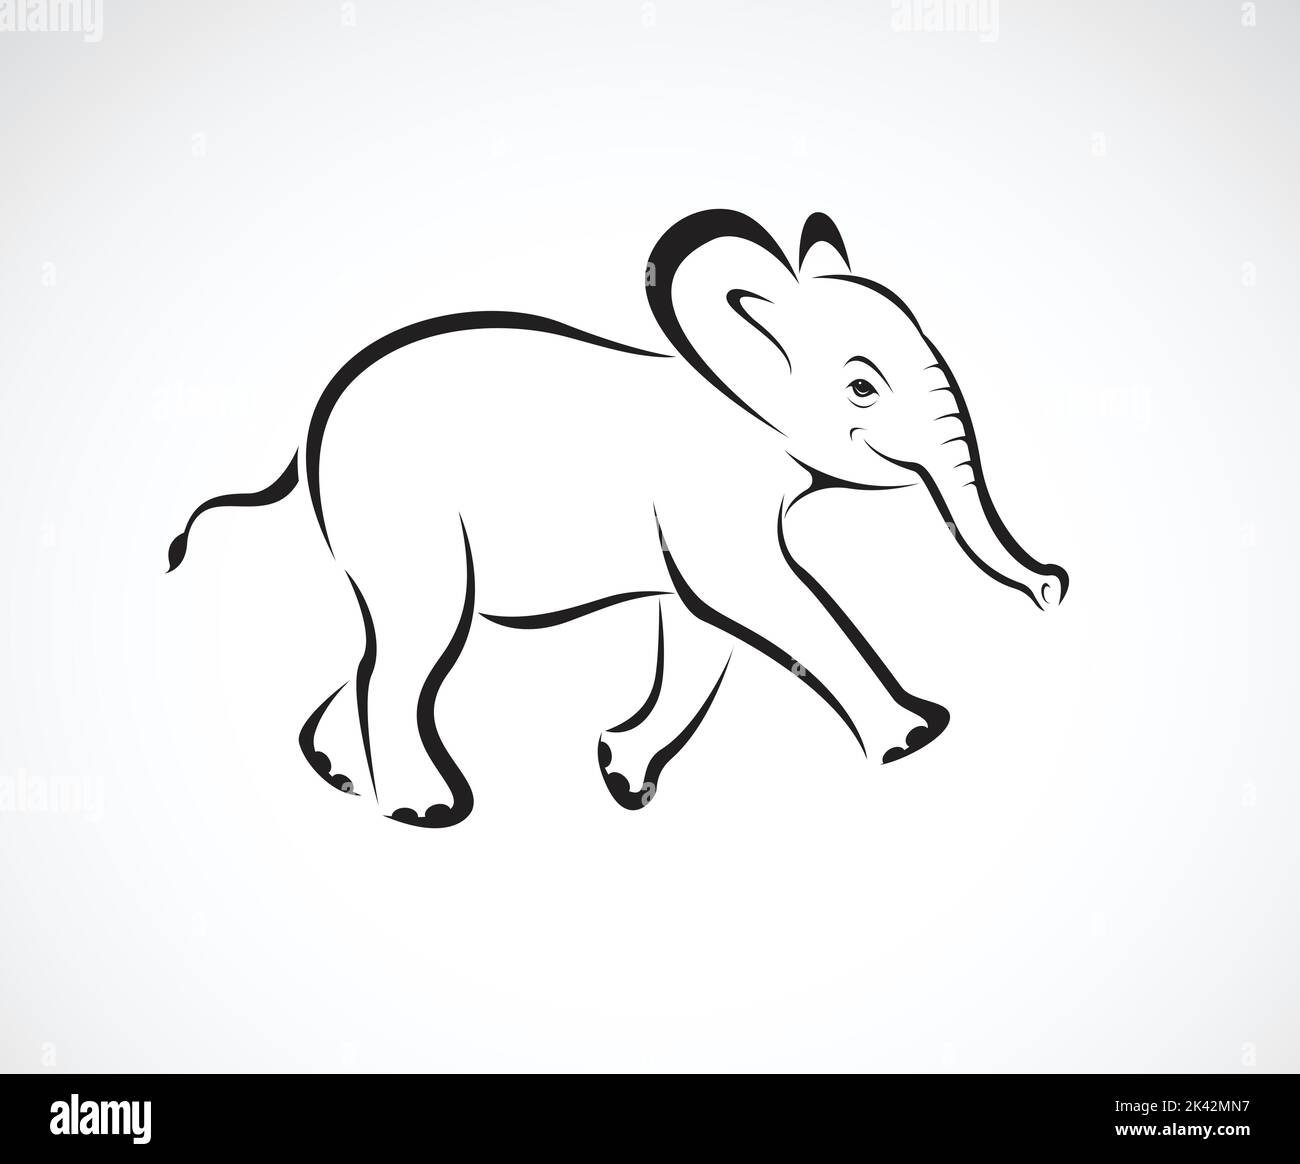 Vector of little elephant design on white background. Wild Animals. Elephant logo or icon. Easy editable layered vector illustration. Stock Vector